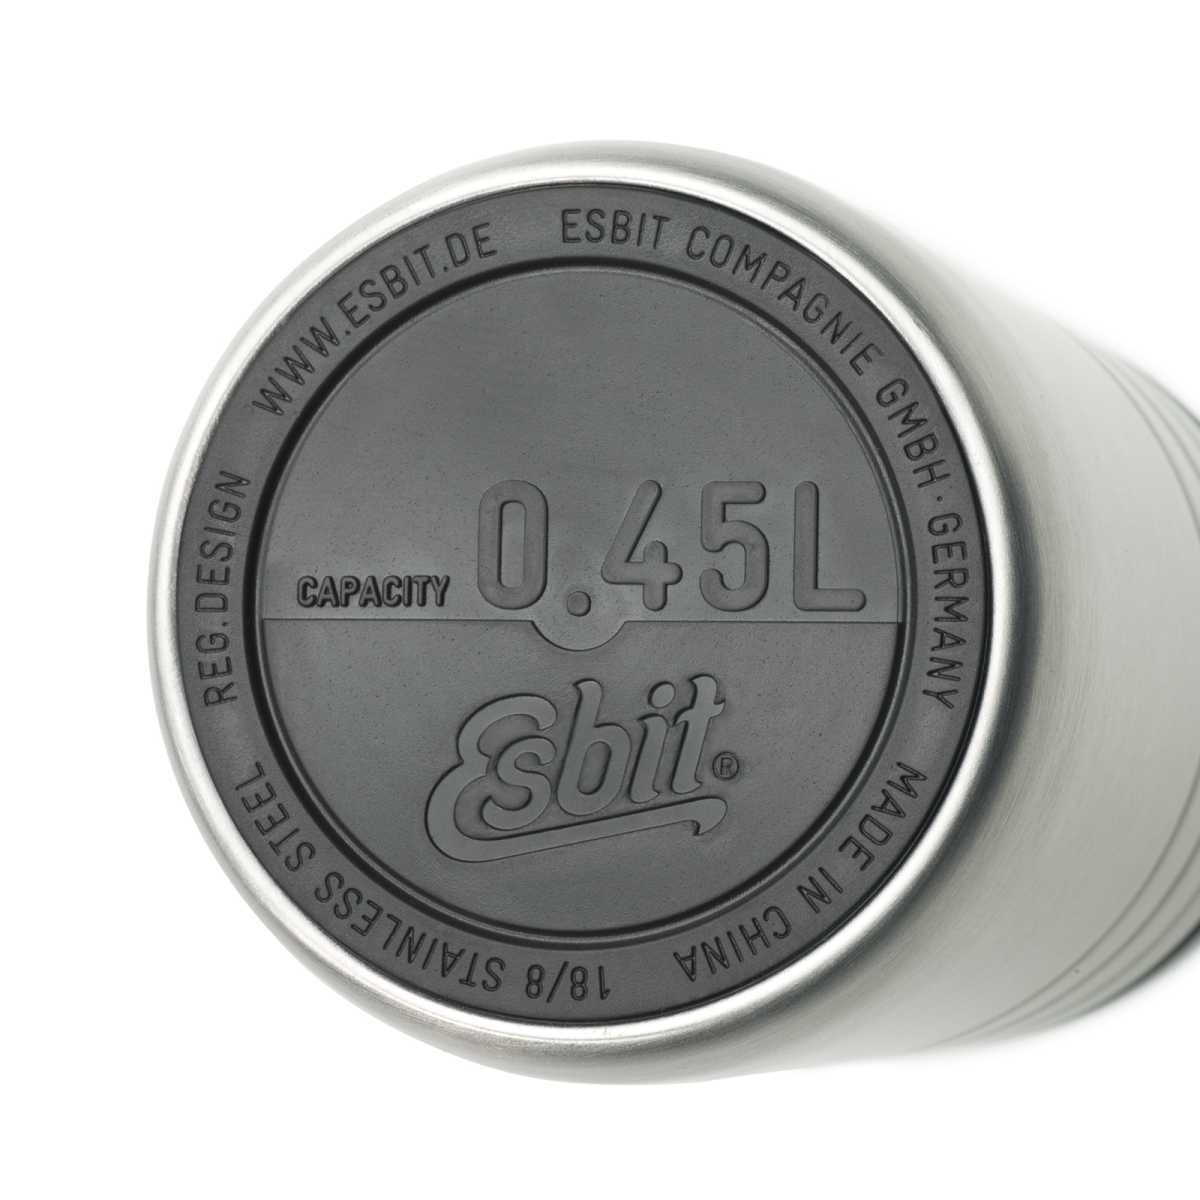 ESBIT Edelstahl Thermobecher MAJORIS mit Klick Verschluss 450 ml - MGF450TL-S